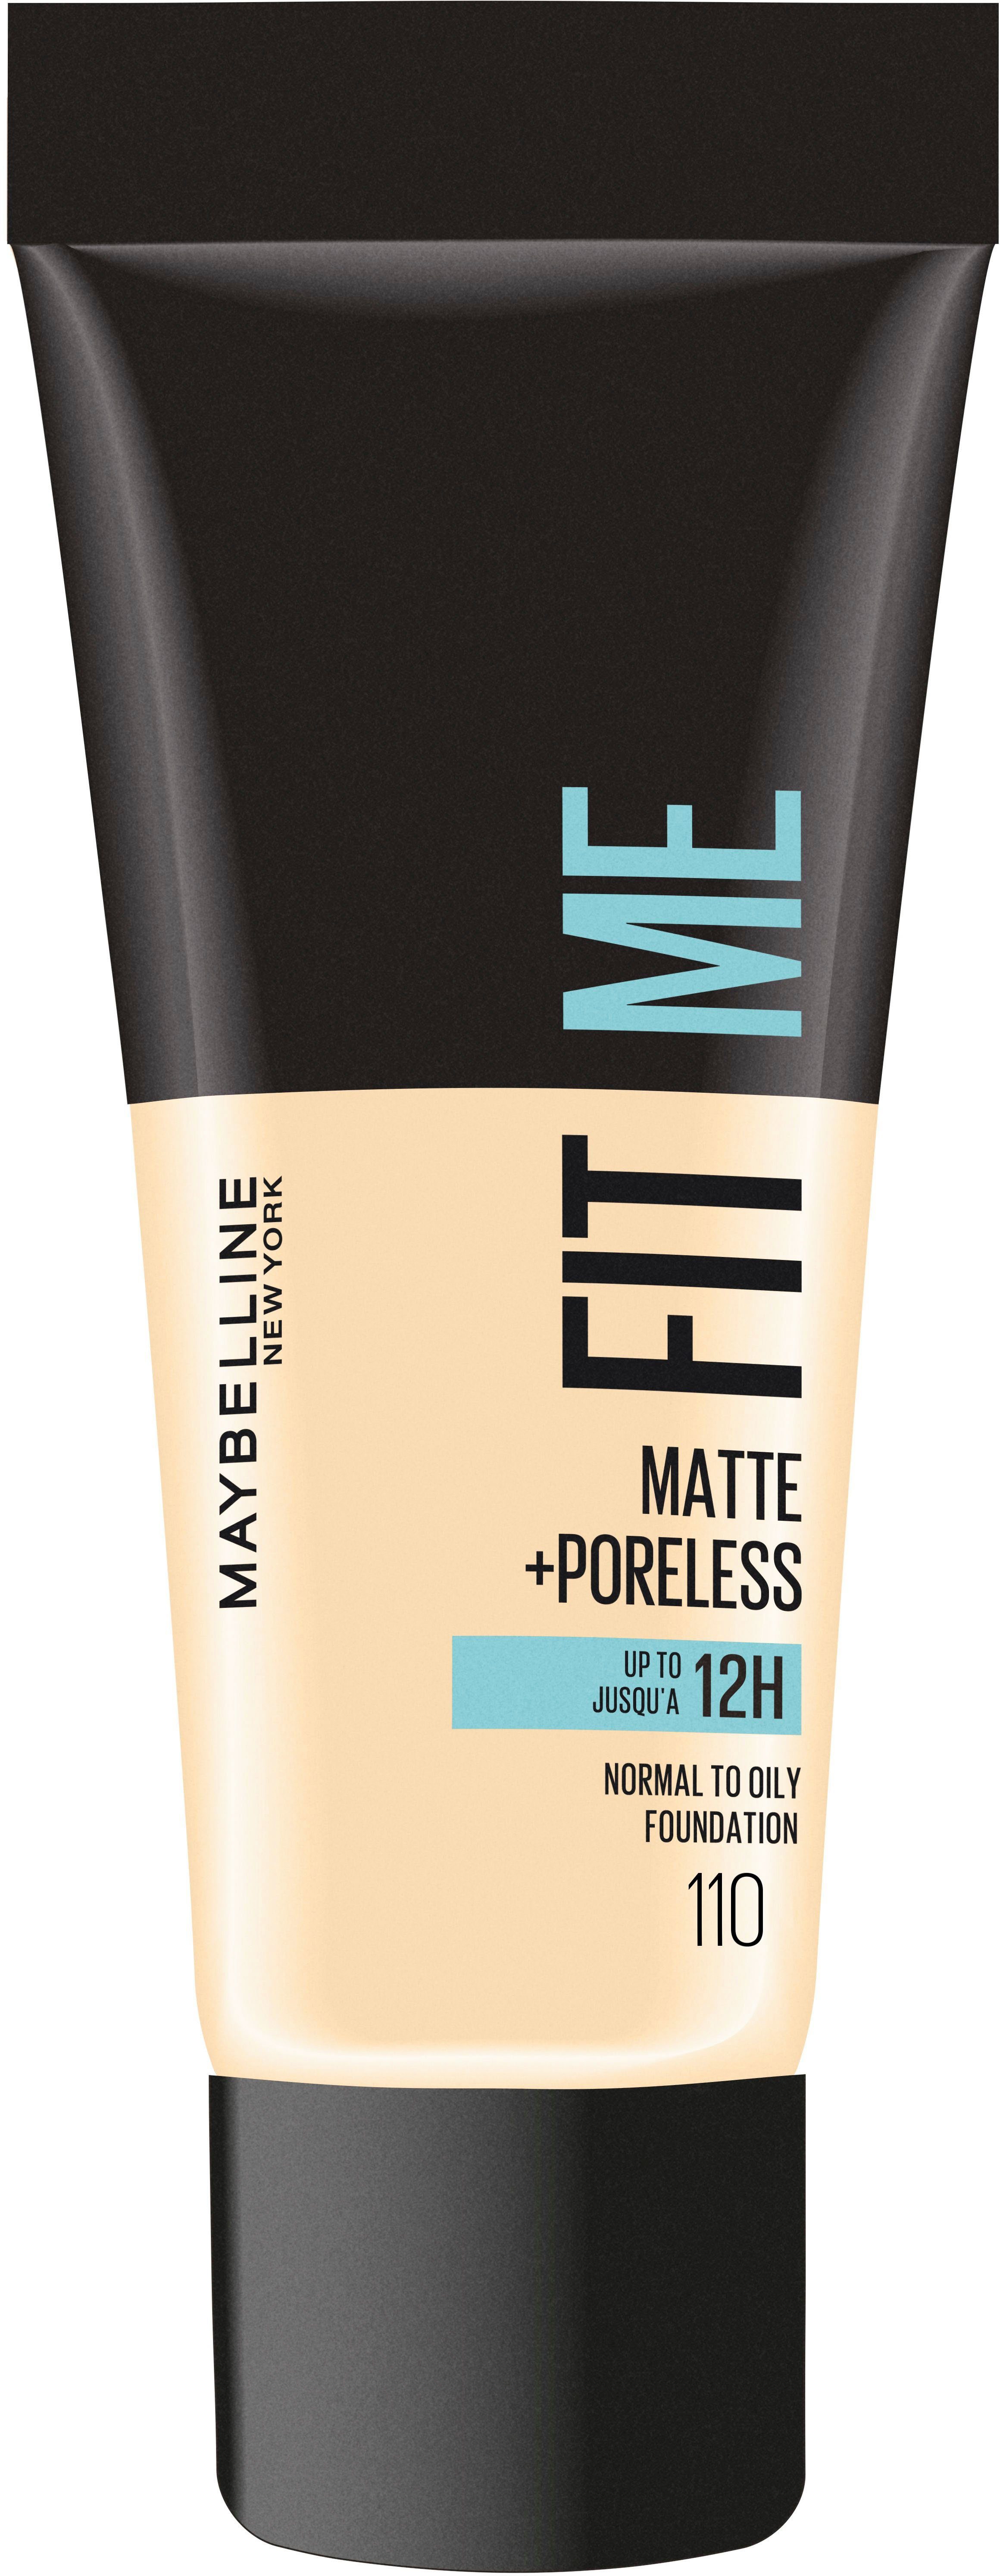 Foundation York Maybelline New Me! Matte MAYBELLINE NEW Make-Up Fit YORK Poreless +